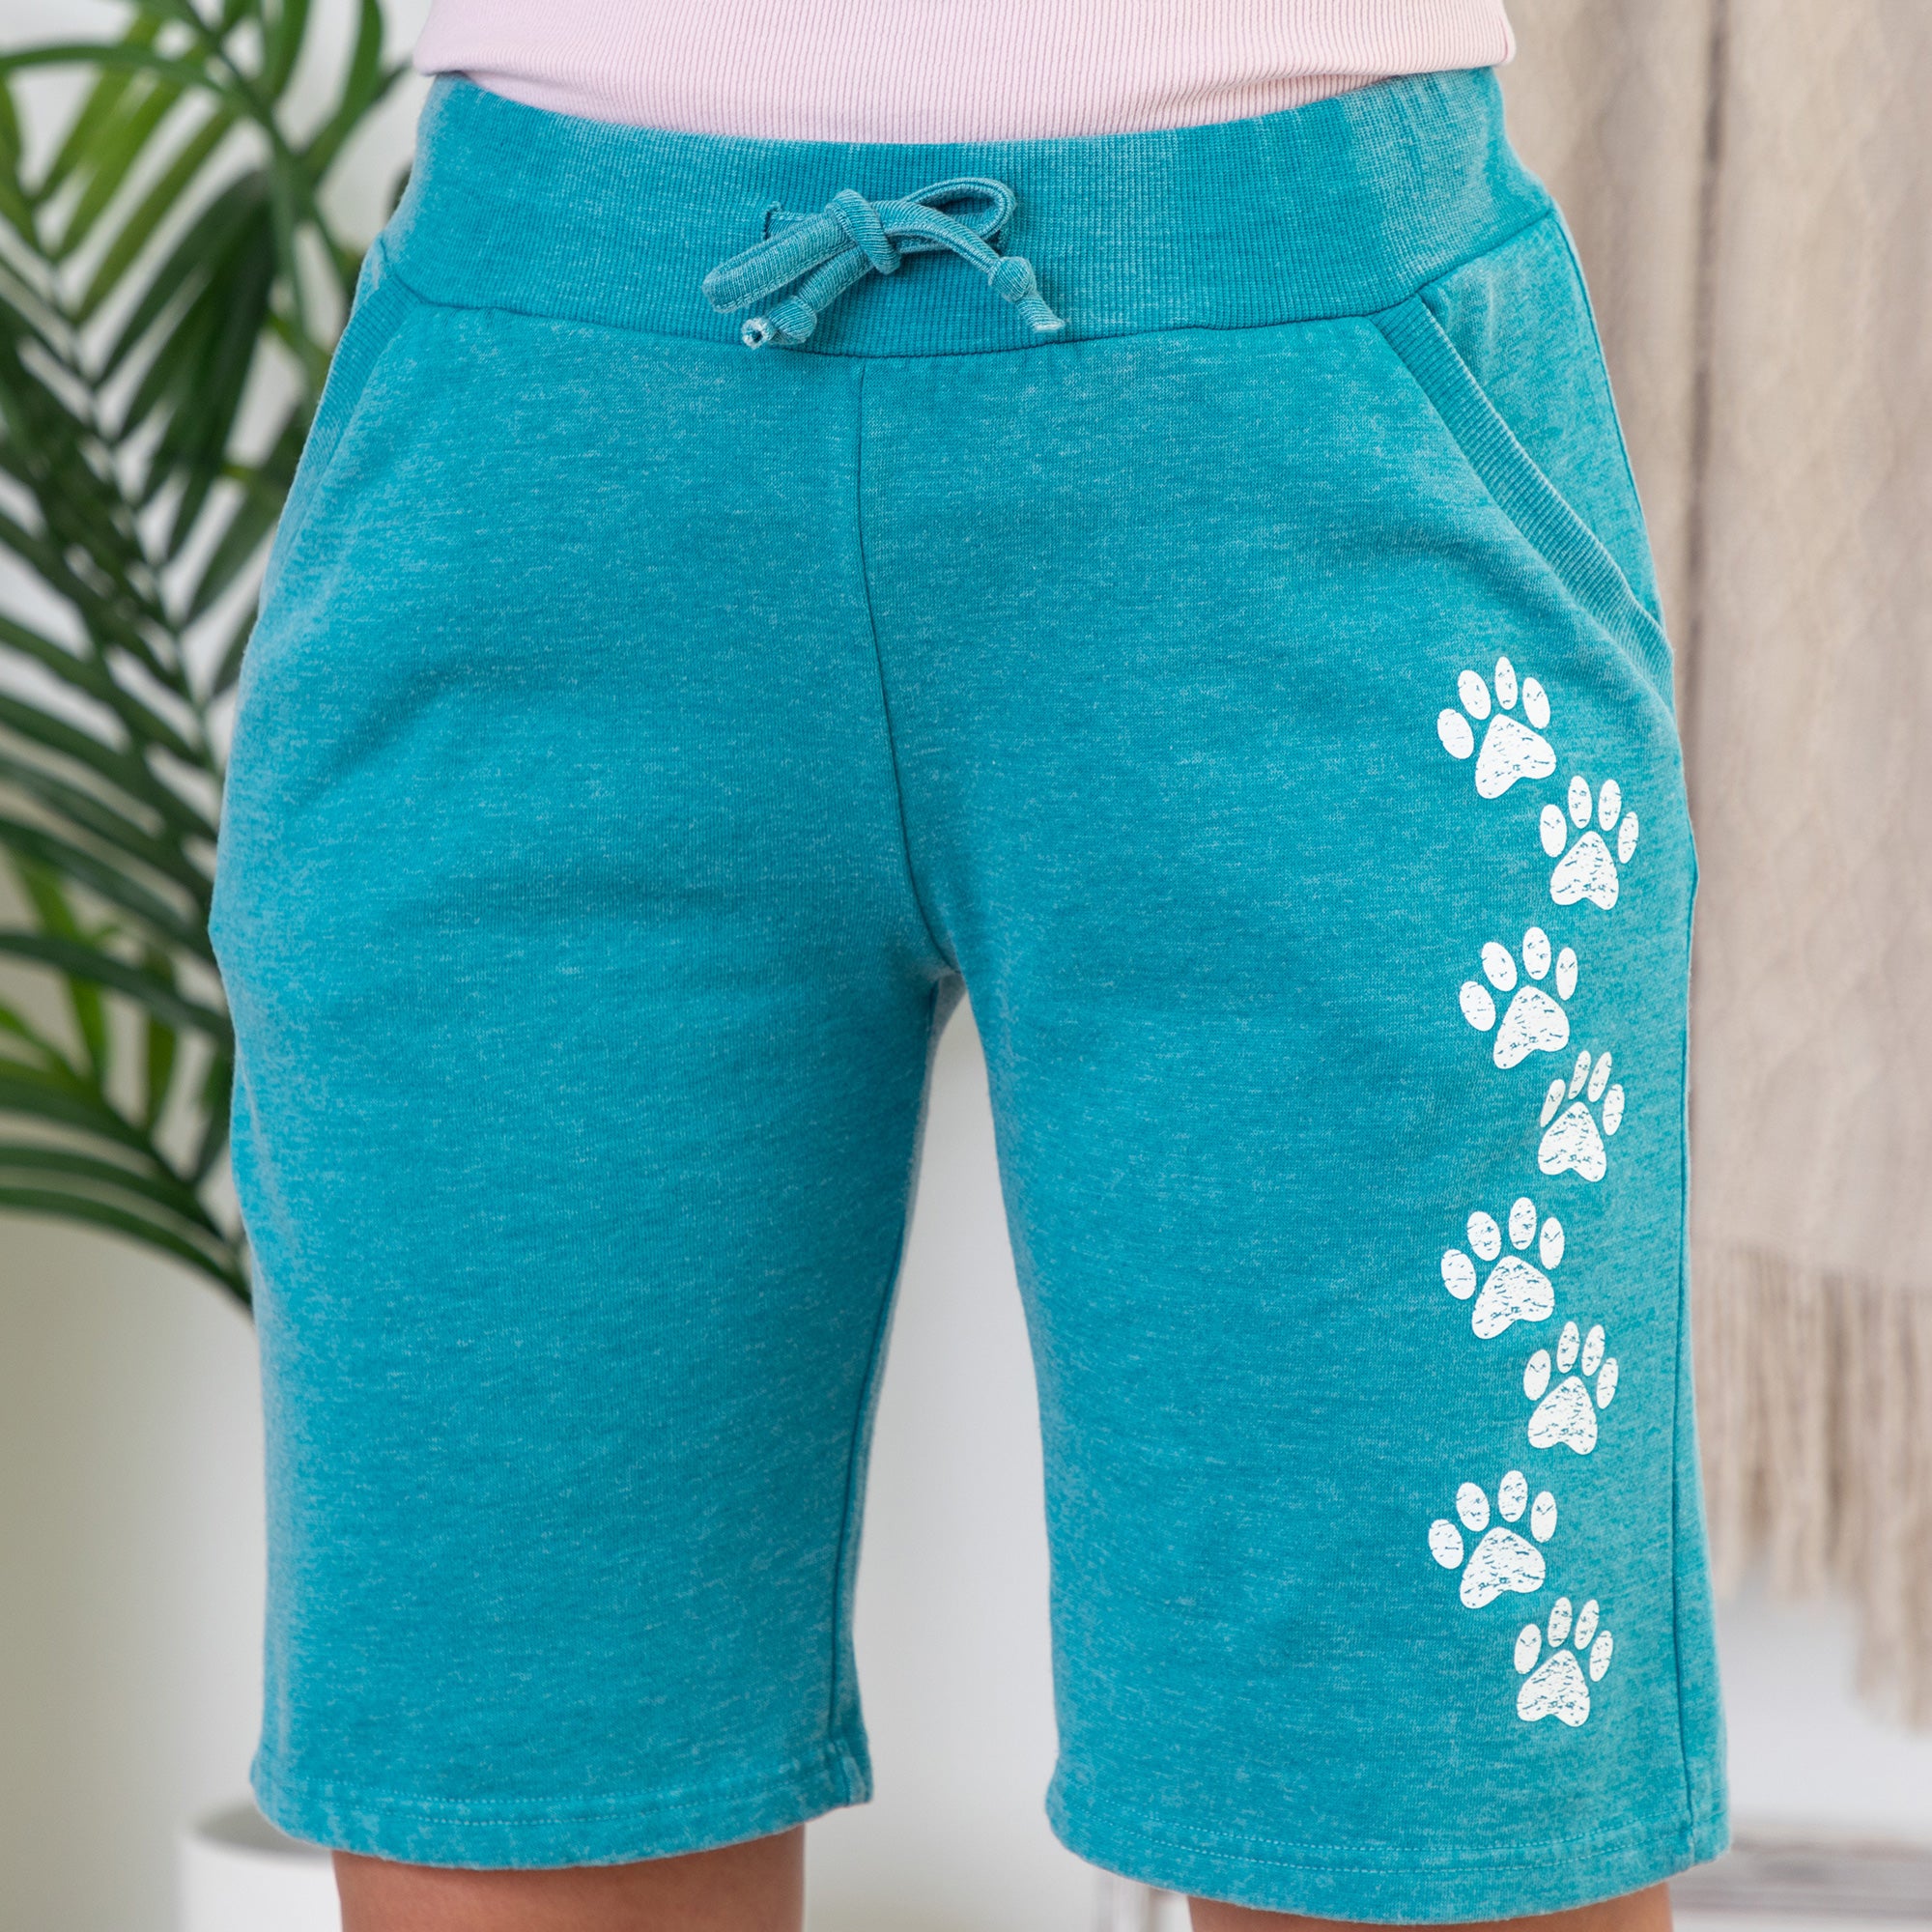 Walking Paws Burnout Board Shorts - Turquoise - XL